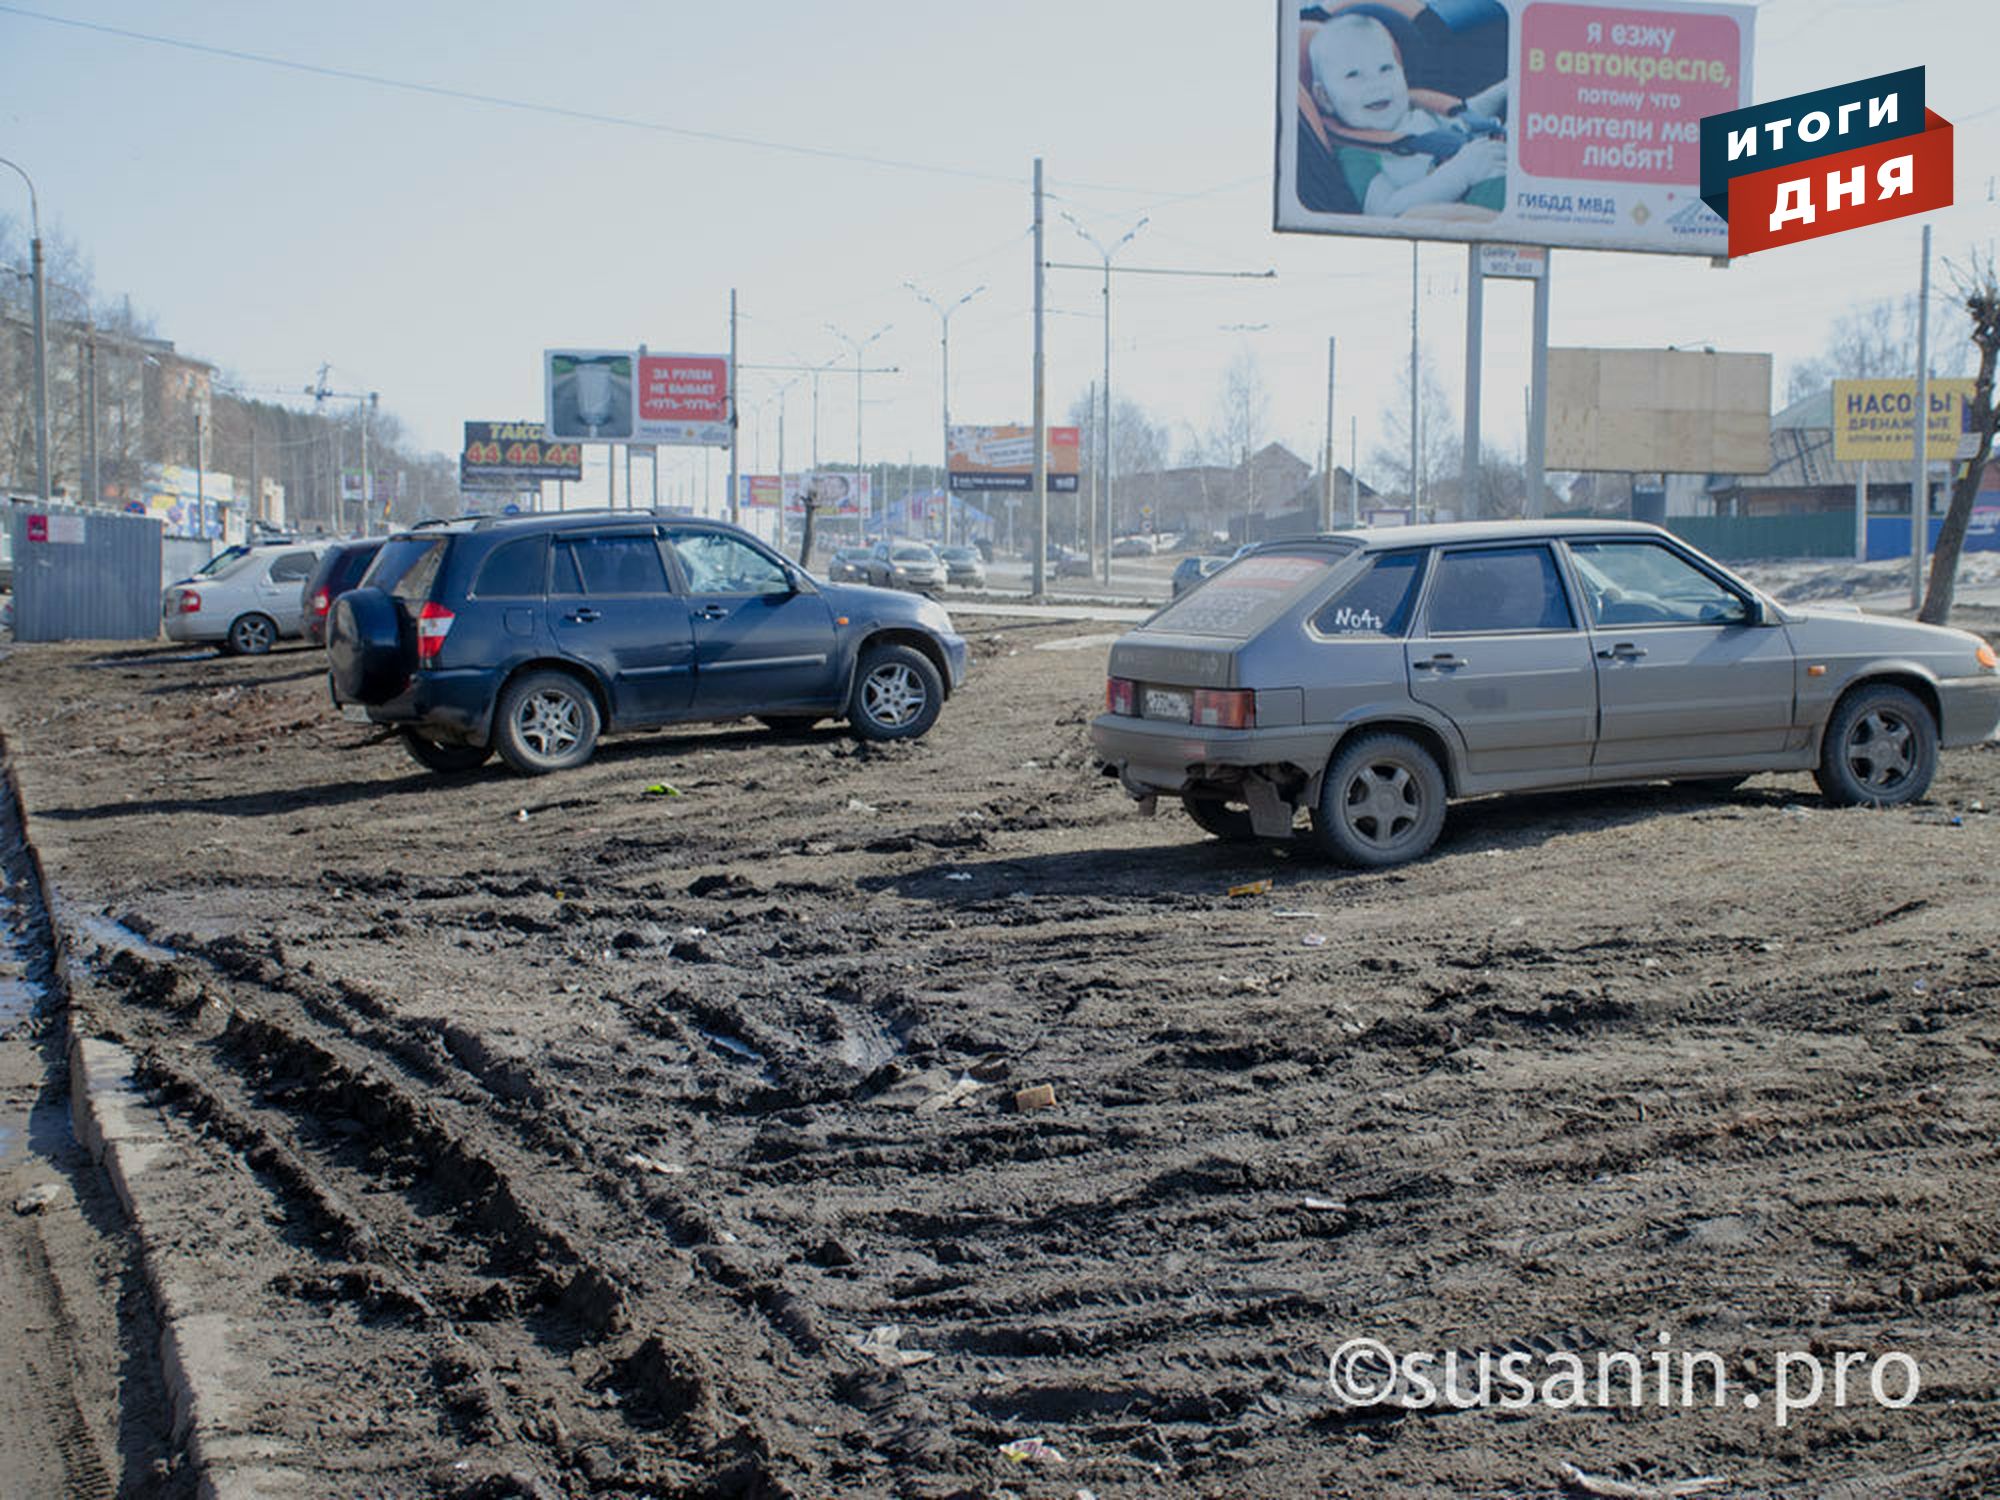 

Итоги дня: парковка на газонах Ижевска и последний звонок в школах Удмуртии

